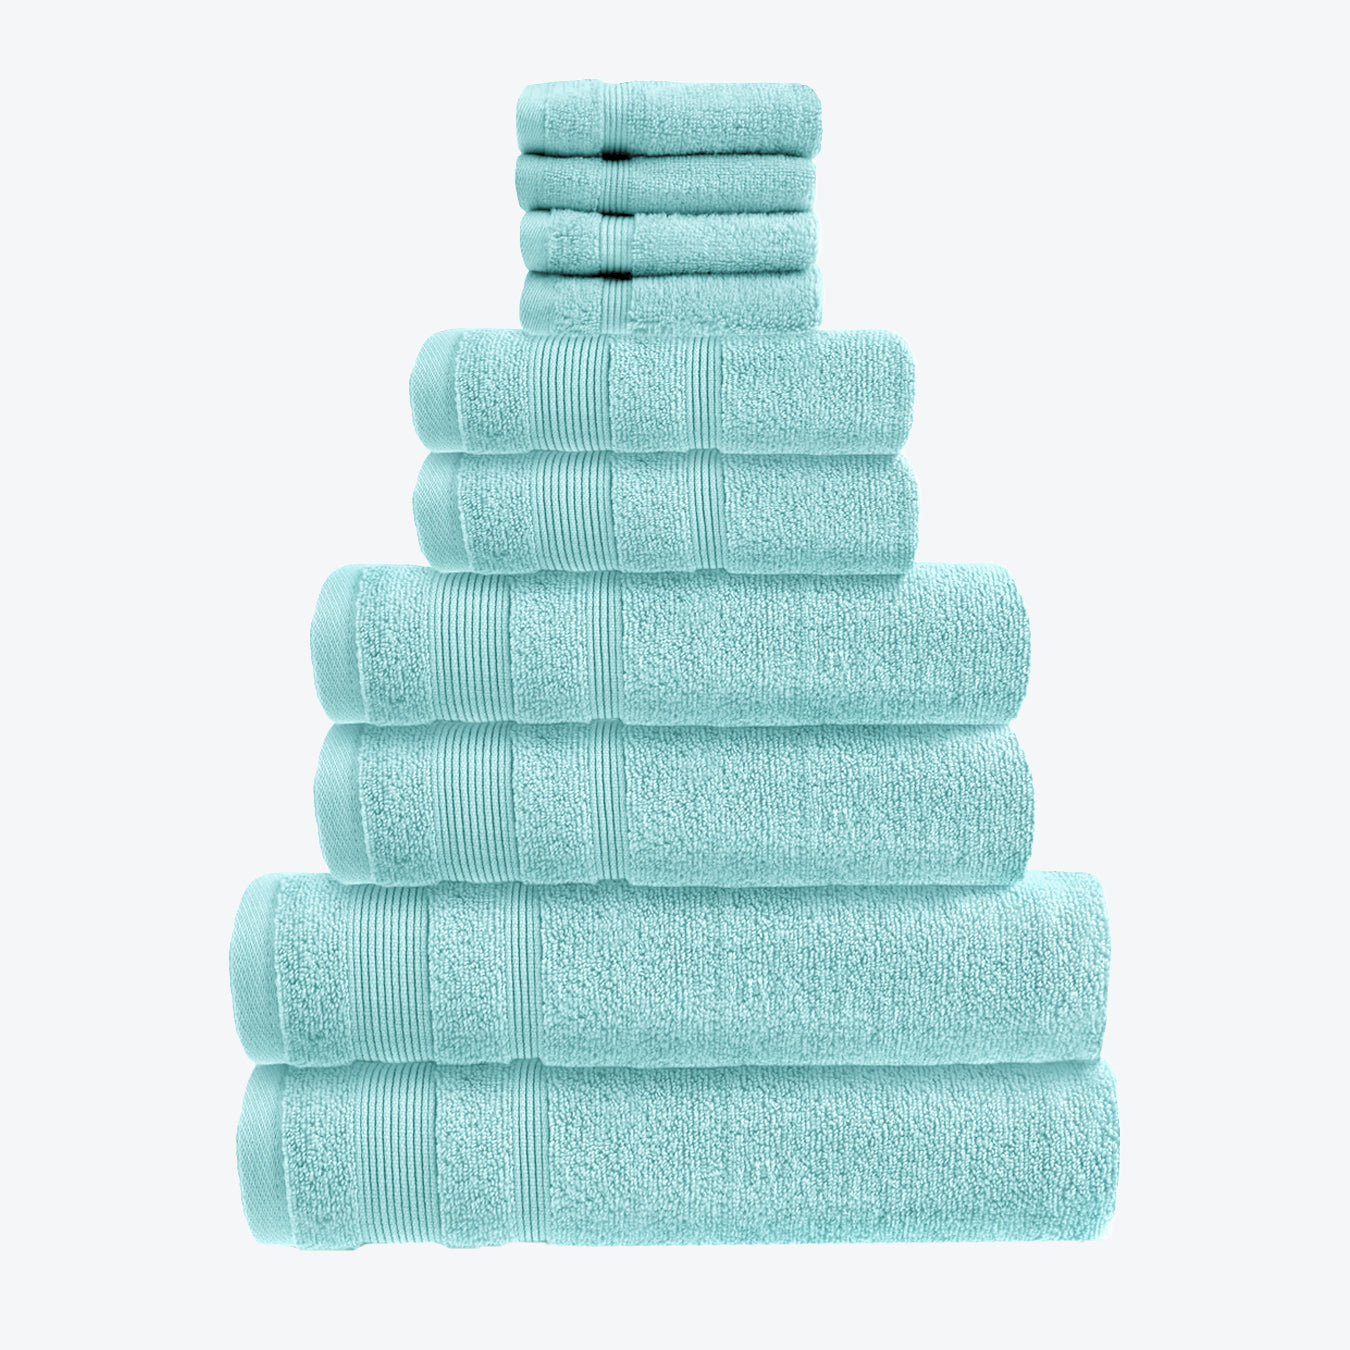 Duck Egg Blue Zero Twist 10pc Towel Set Egyptian Cotton Bathroom Towel Bale. Hand Towels, Bath Towels, Bath Sheets, and Face Cloths